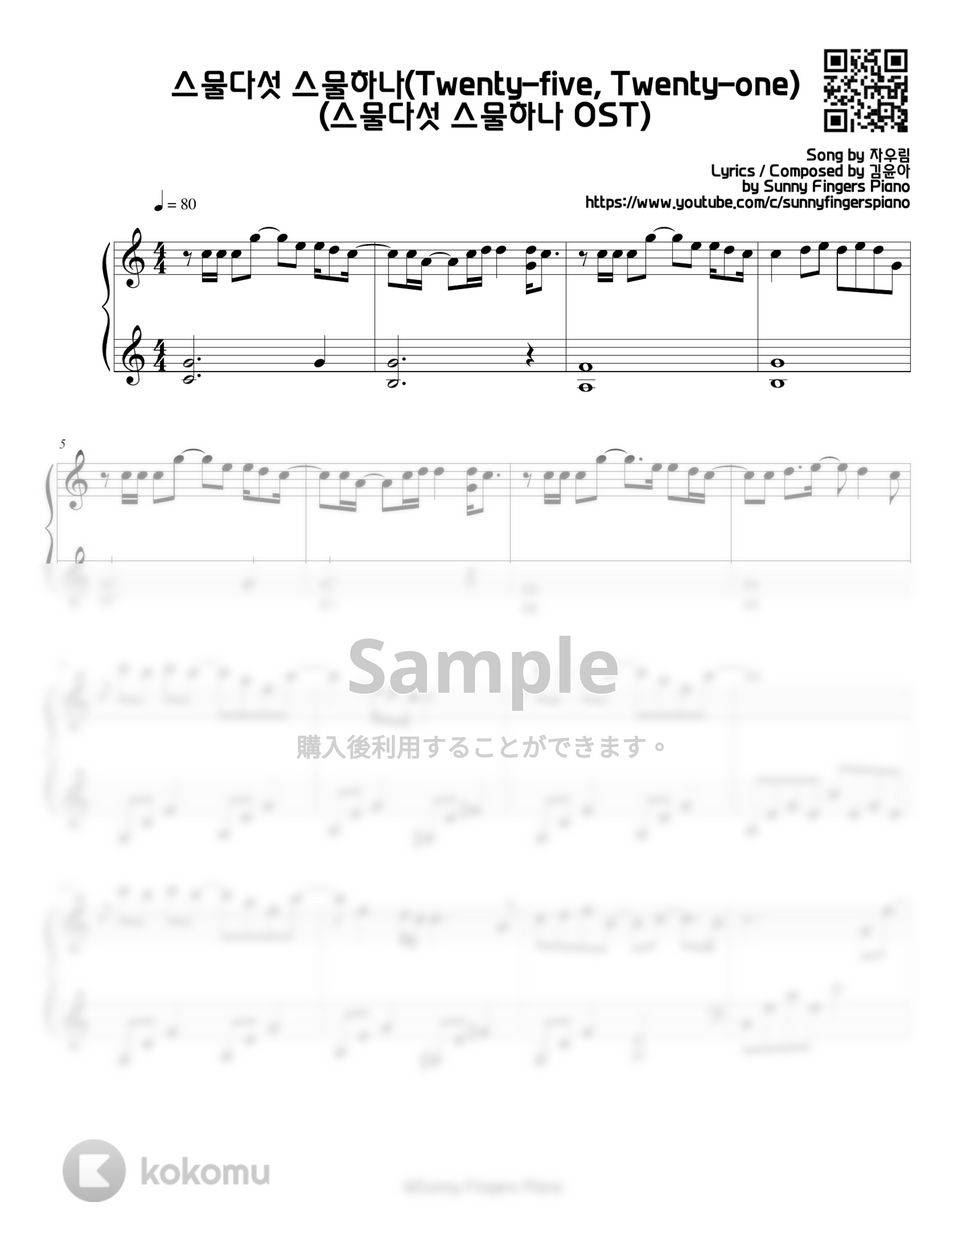 Twenty-Five Twenty-one OST - 25, 21(The hidden meanings) - Jaurim by Sunny Fingers Piano